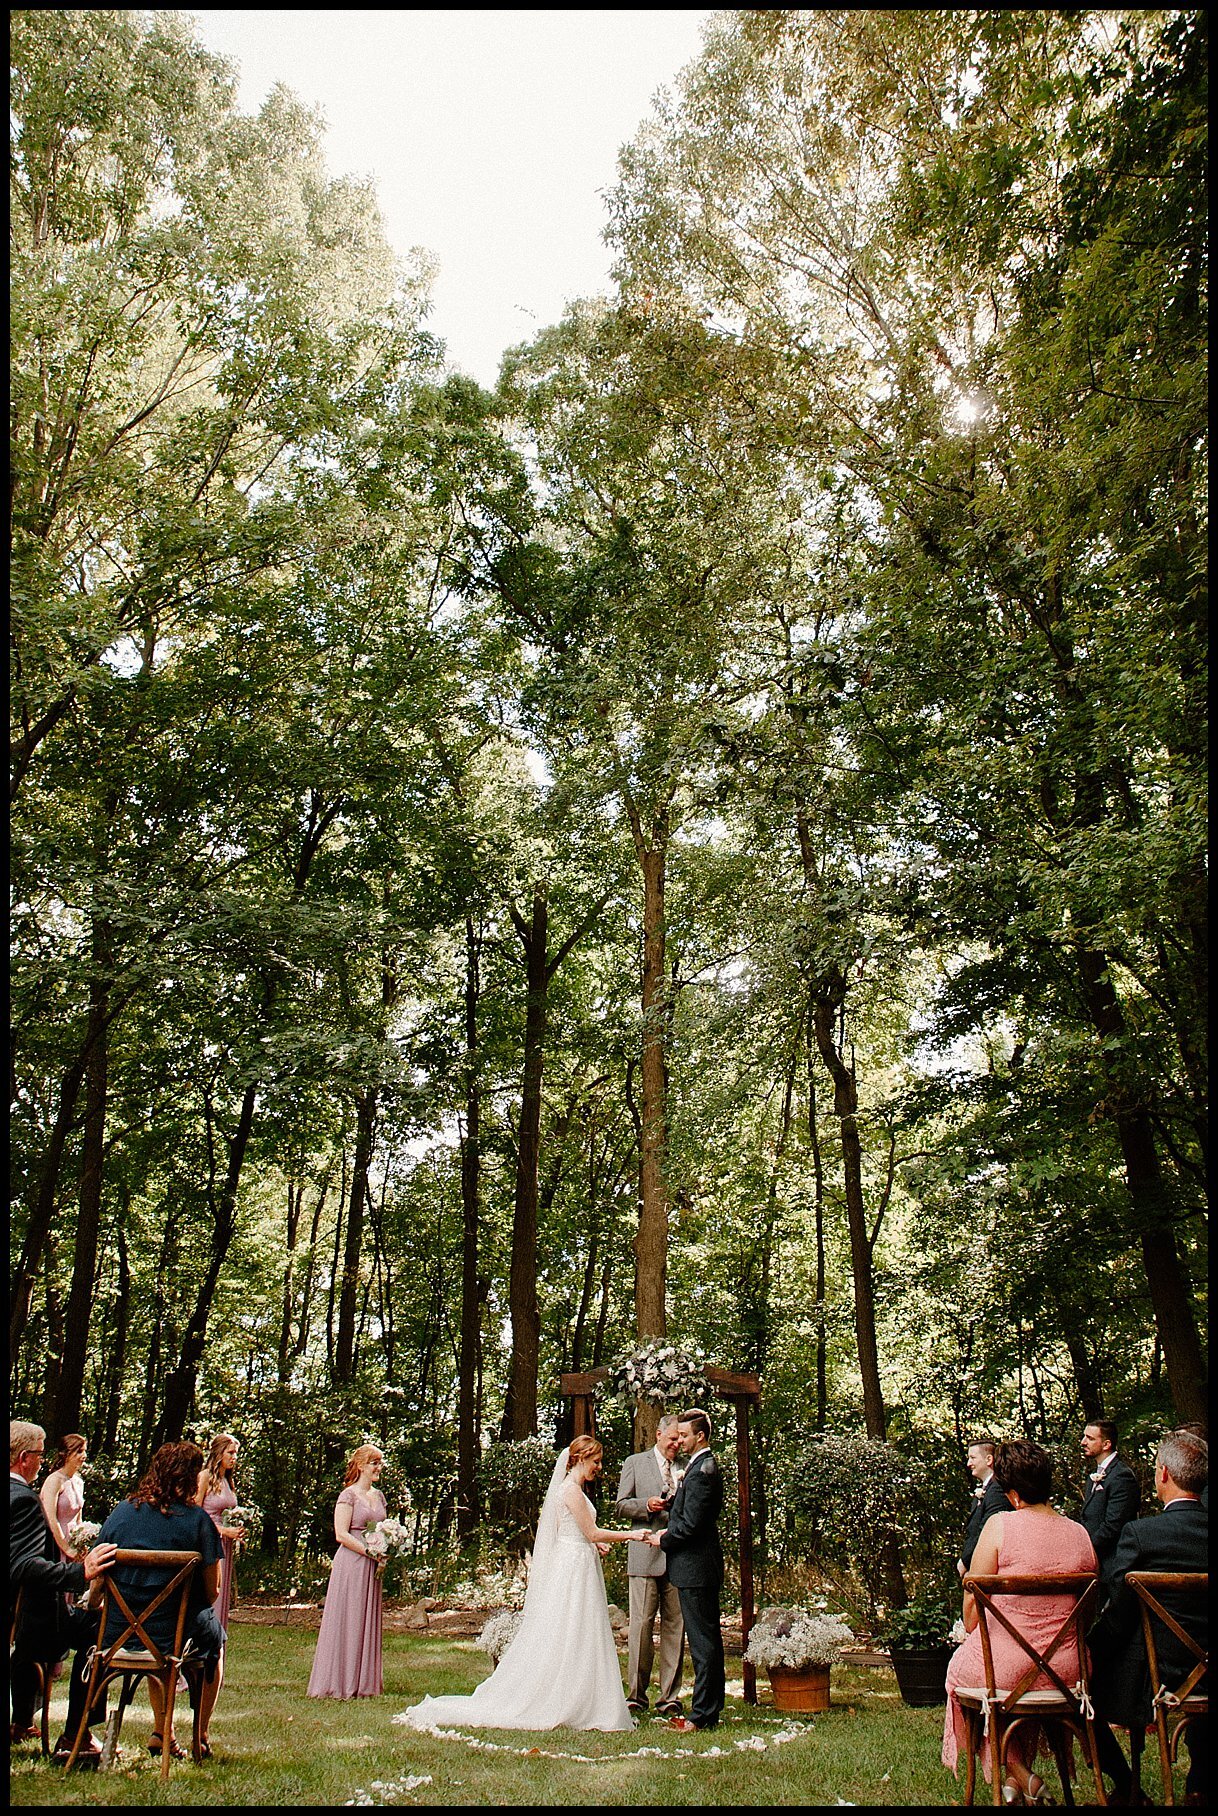 An intimate backyard wedding in the woods in Farmington, Michigan with beautiful sunshine.